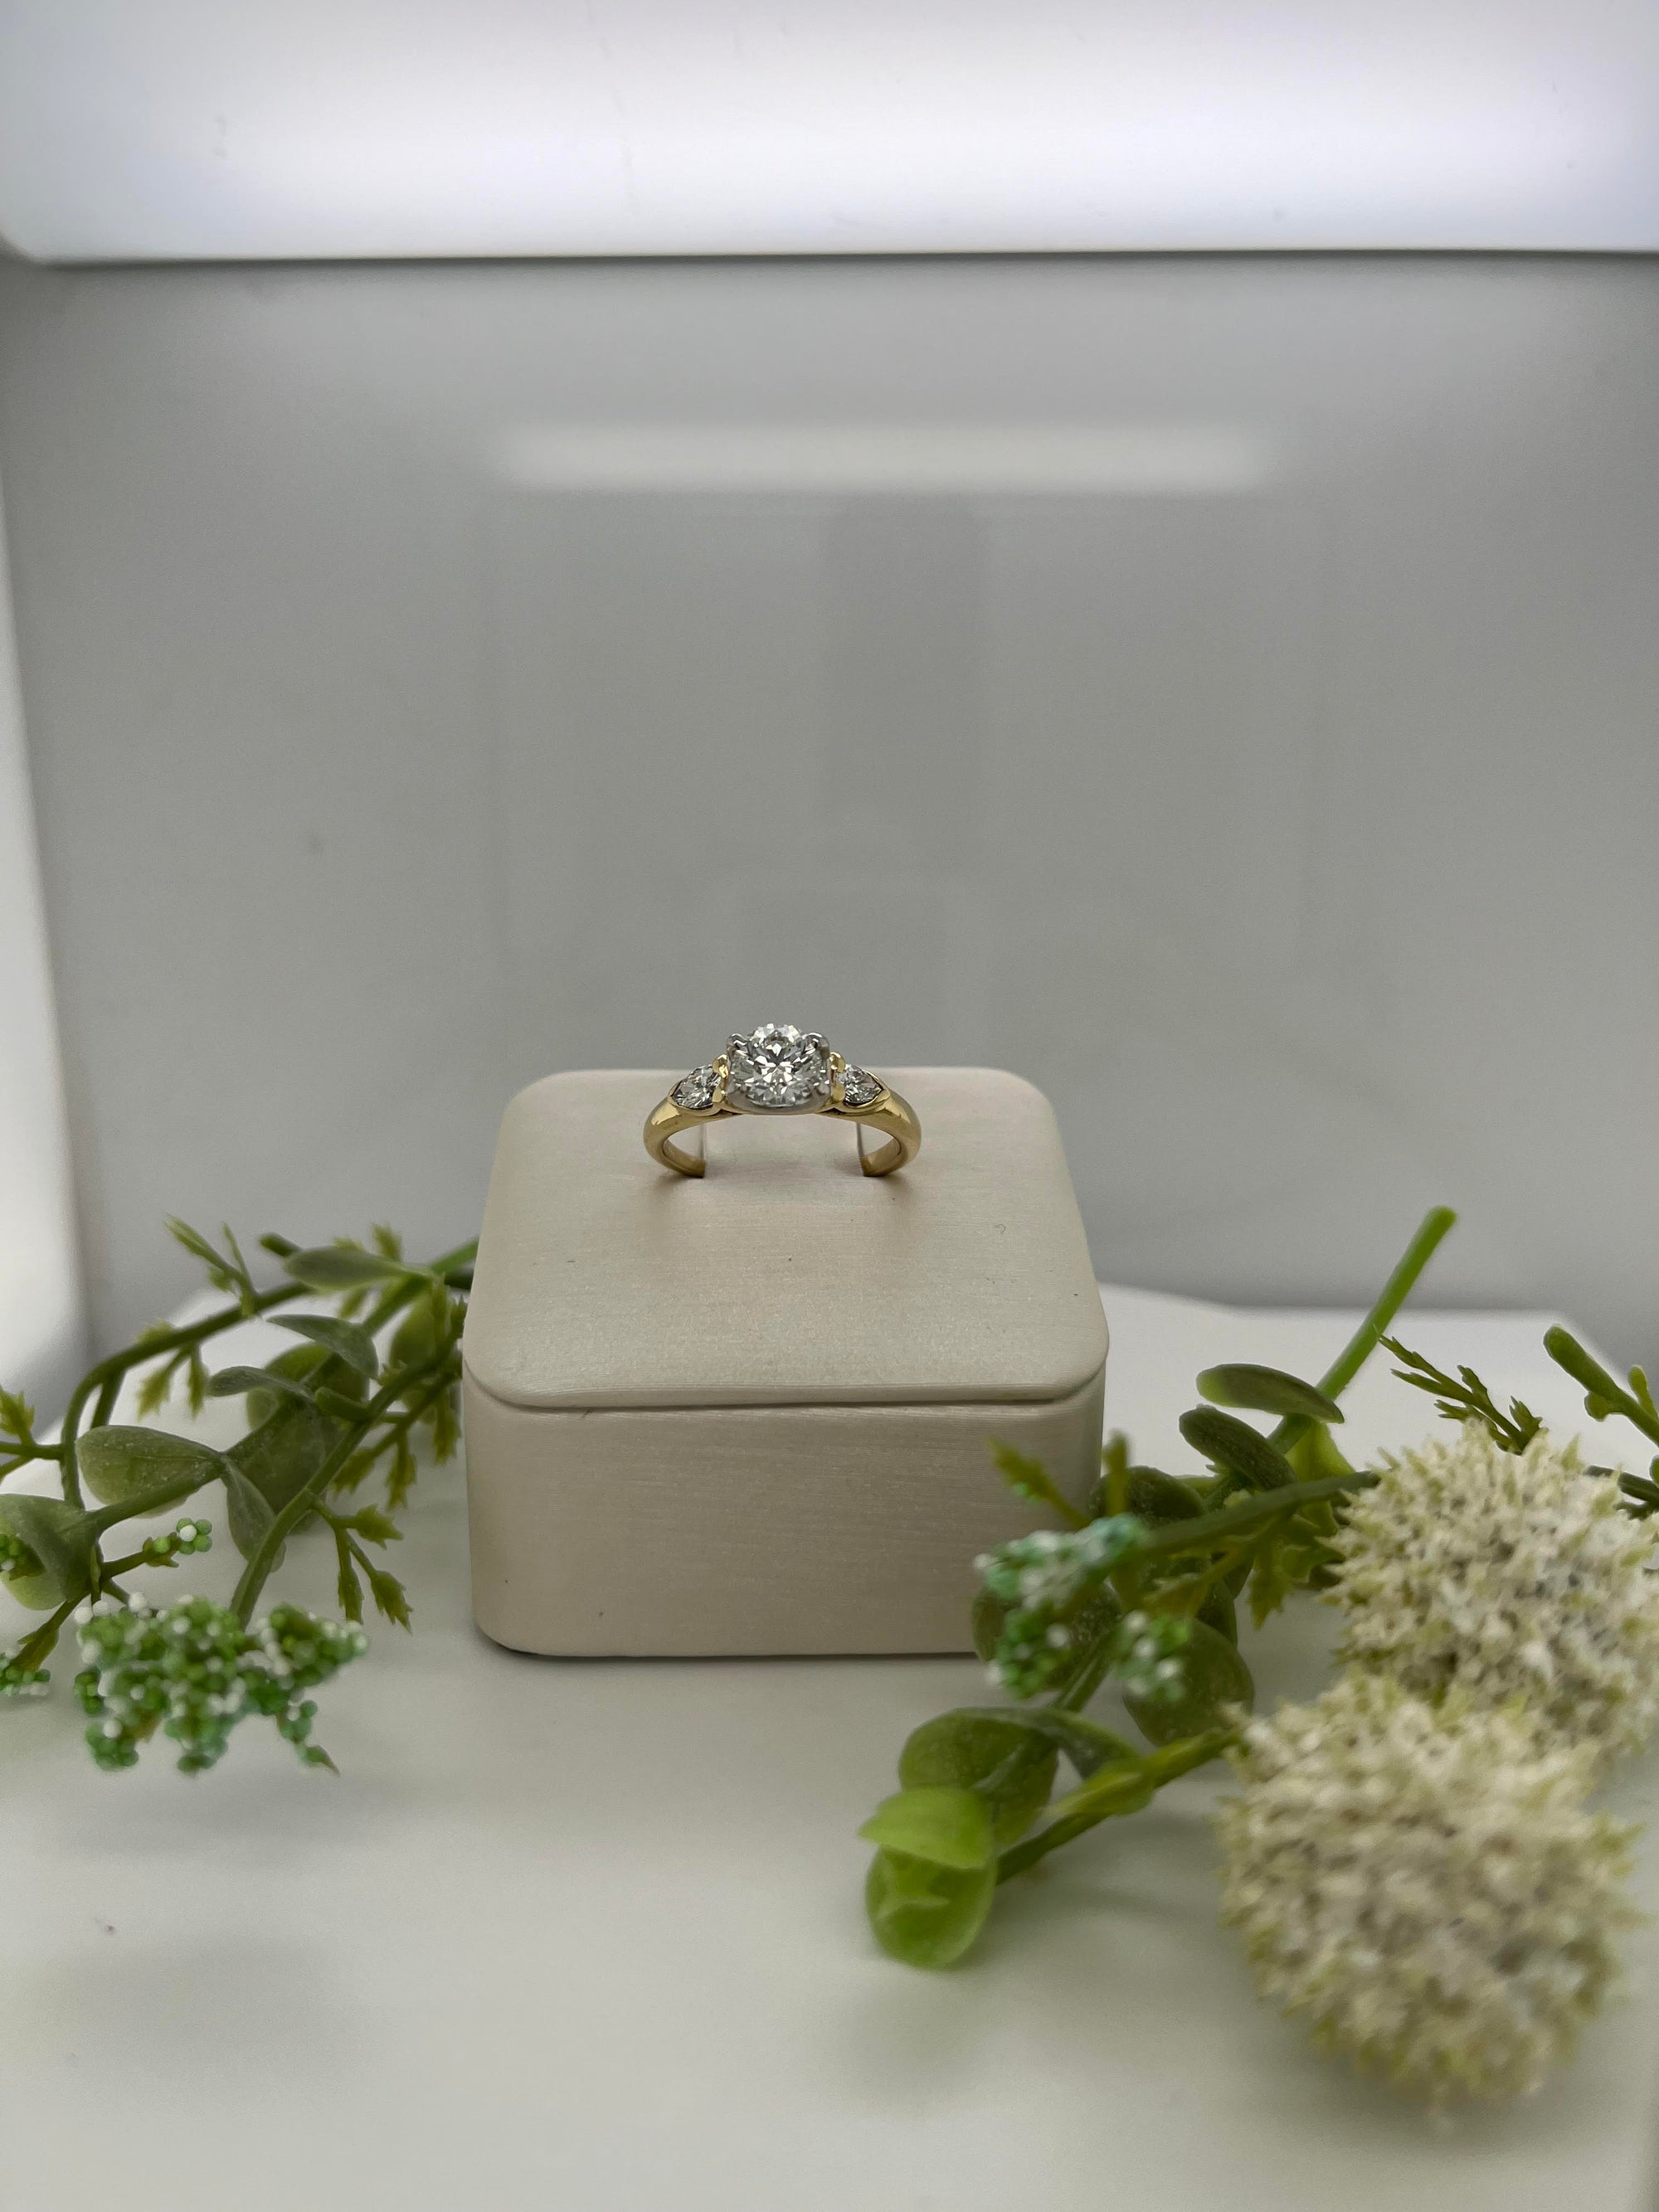 Diamond Yellow Gold Engagement Ring